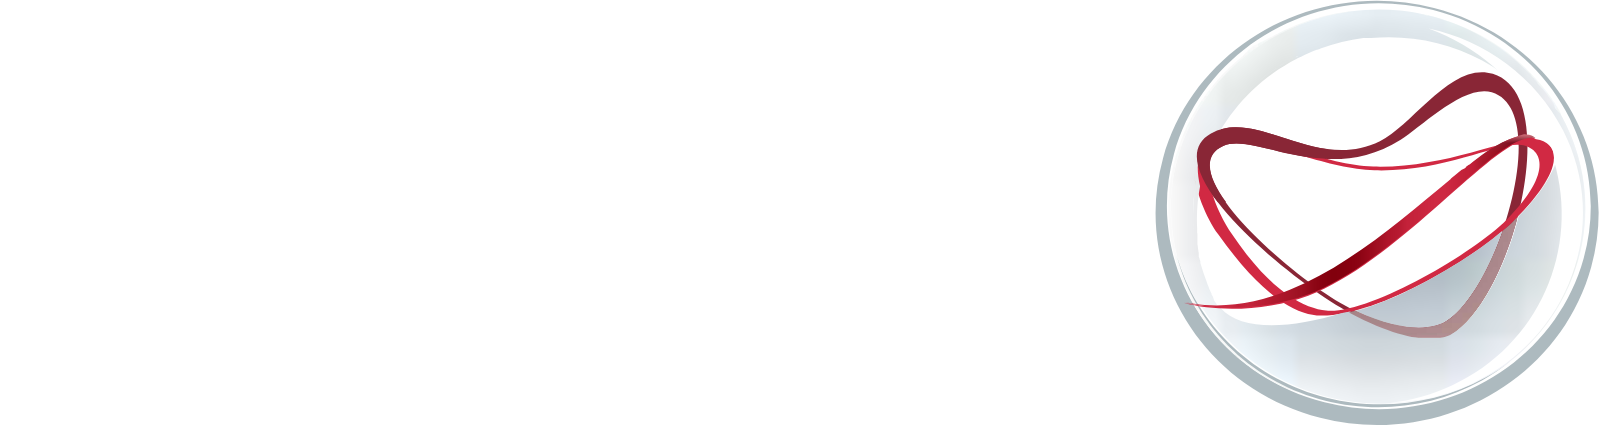 Anima Holding logo grand pour les fonds sombres (PNG transparent)